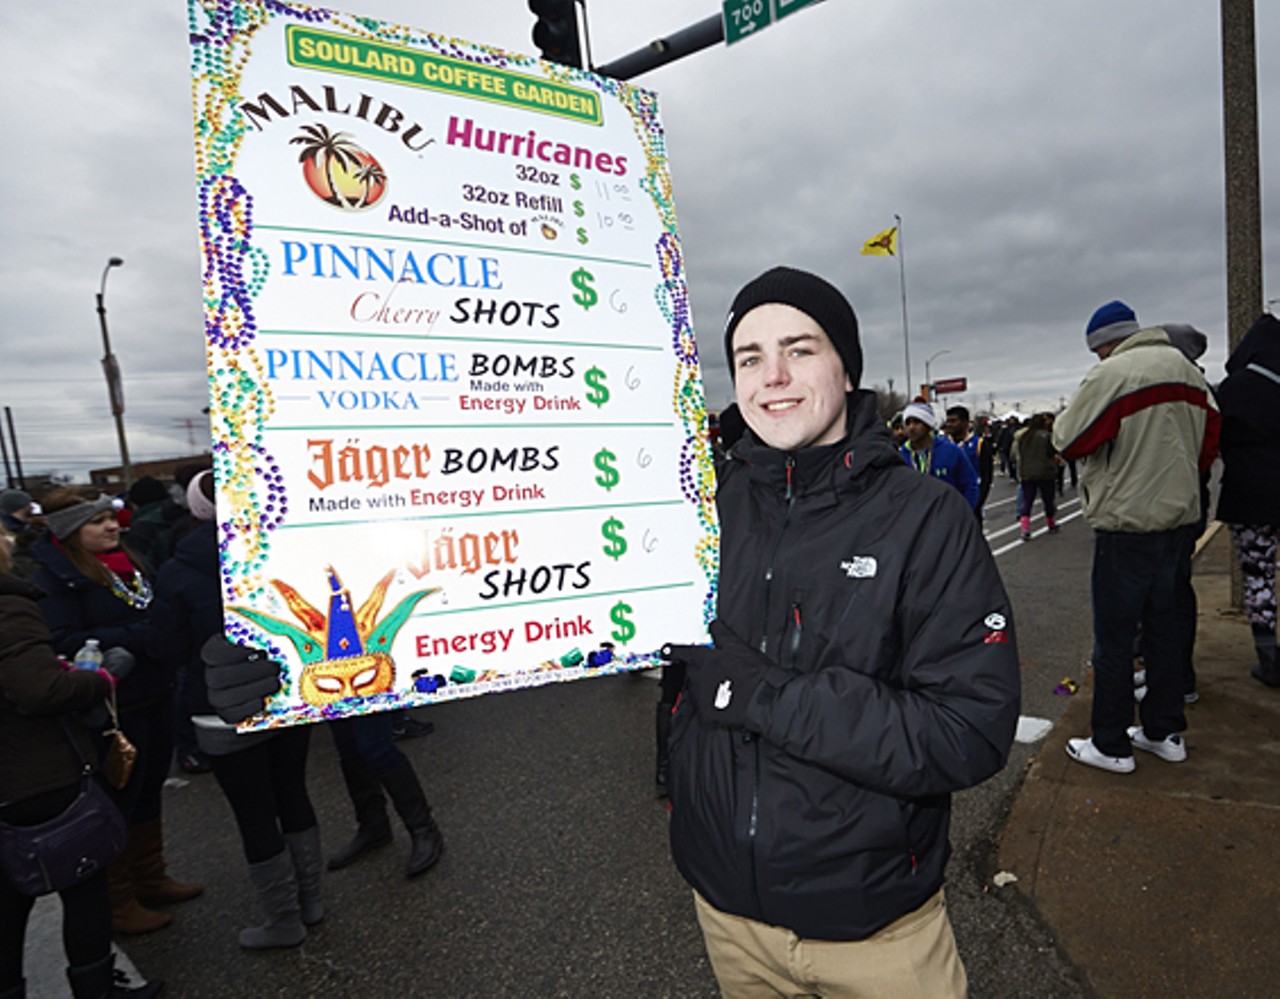 John Nettles holds a sign advertising Soulard Coffee Garden's Mardi Gras drink specials.